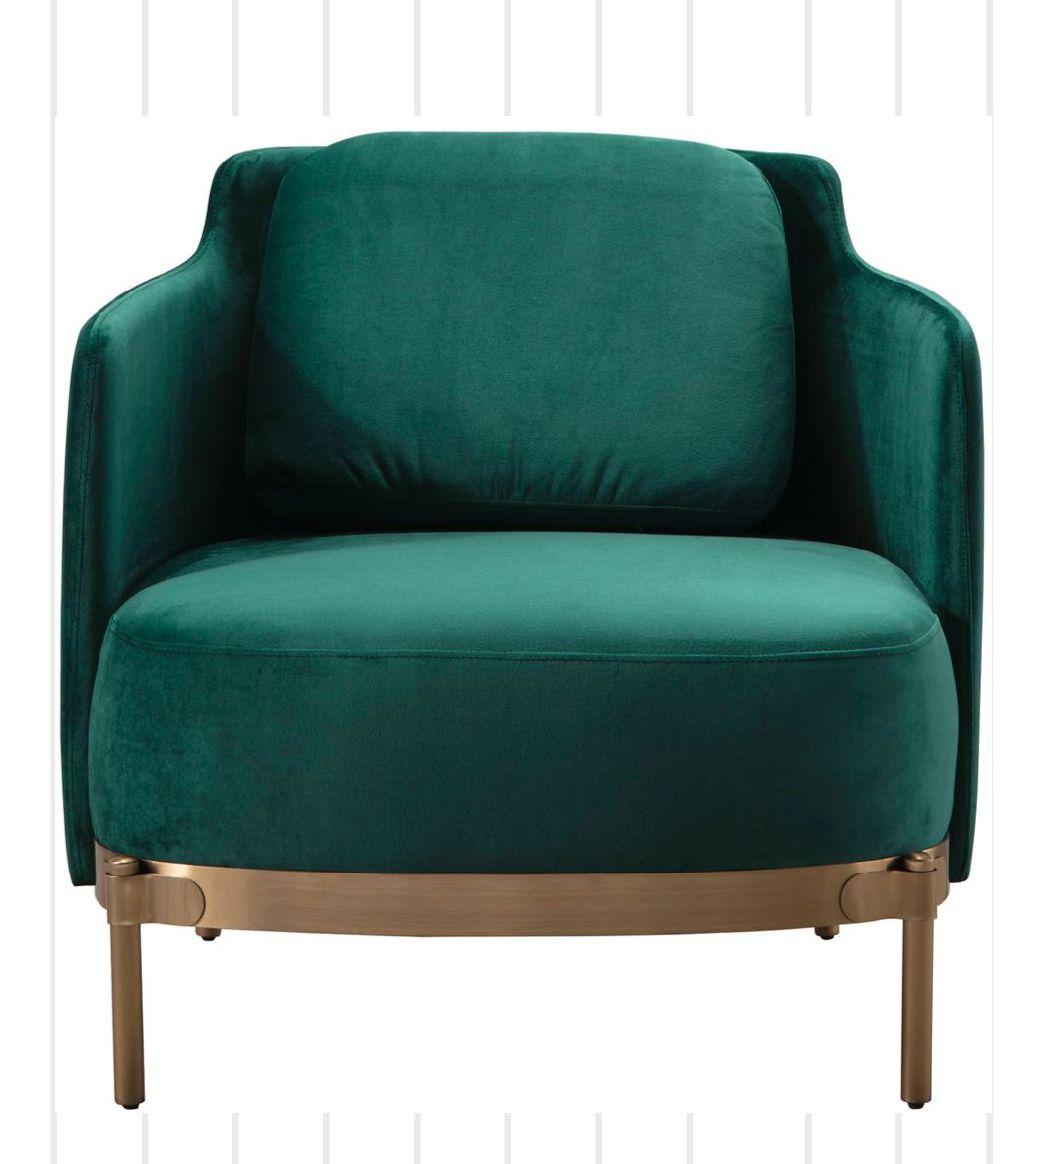 European Design Single Chair Tufted Living Room Leisure Chair Sofa for Hotel Restaurants